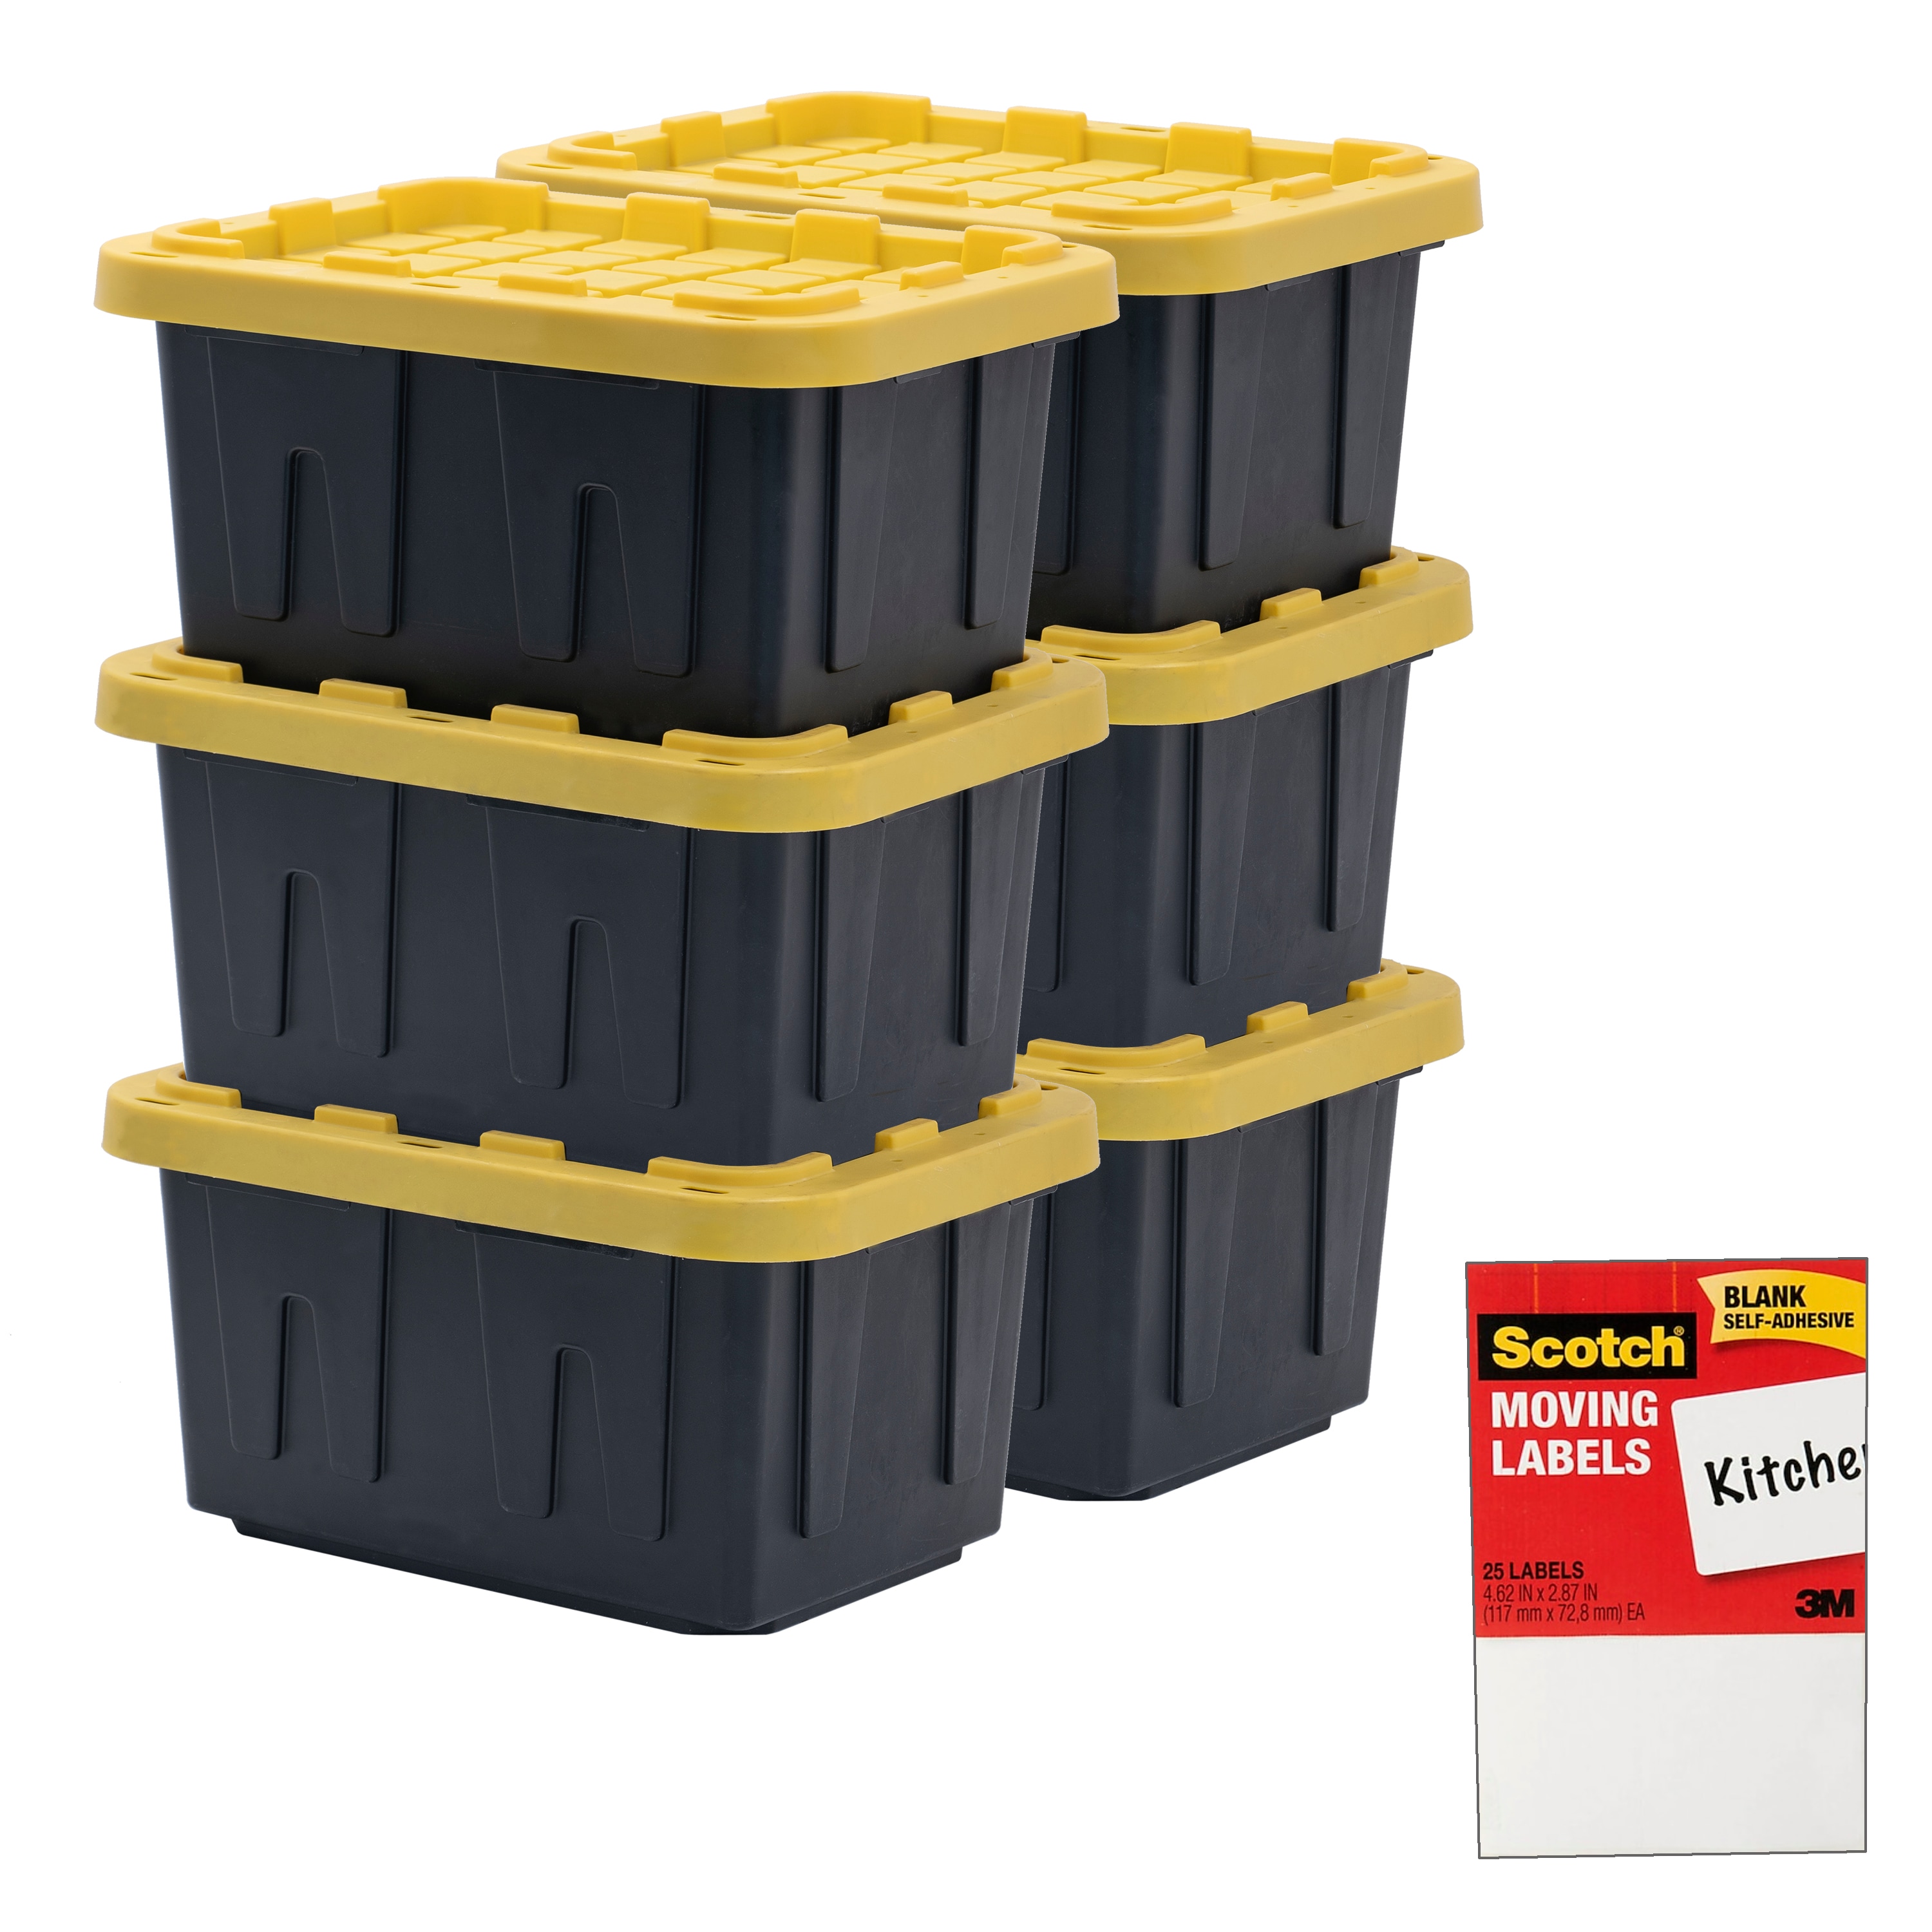 Black Storage Tote 27 Gallon W Snap On Lid Stackable Polypropylene Heavy  Duty